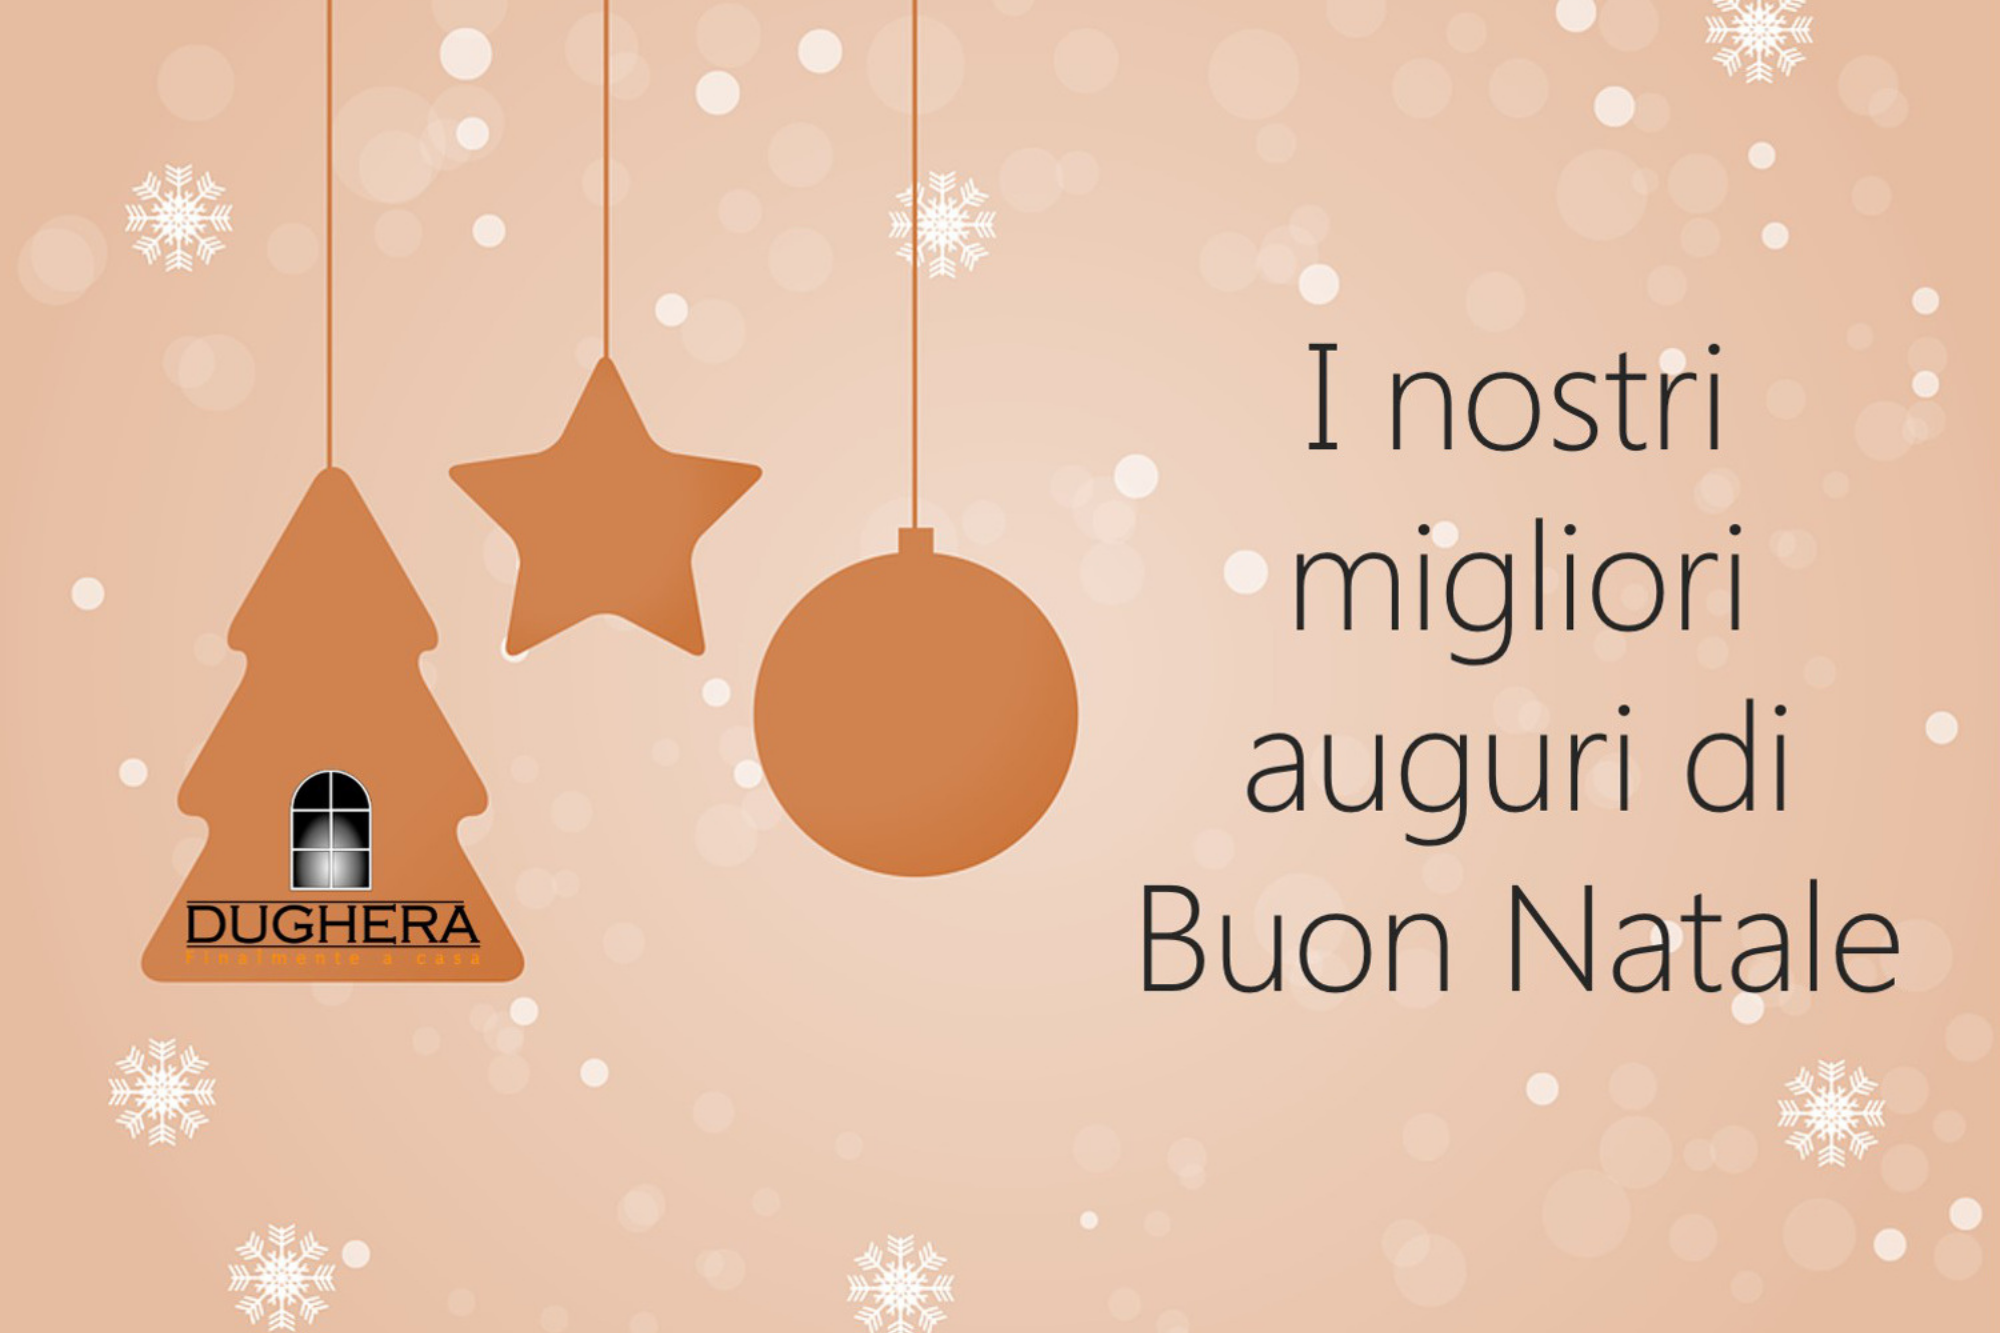 Dughera-Serramenti-newsletter-Buon-Natale-2020